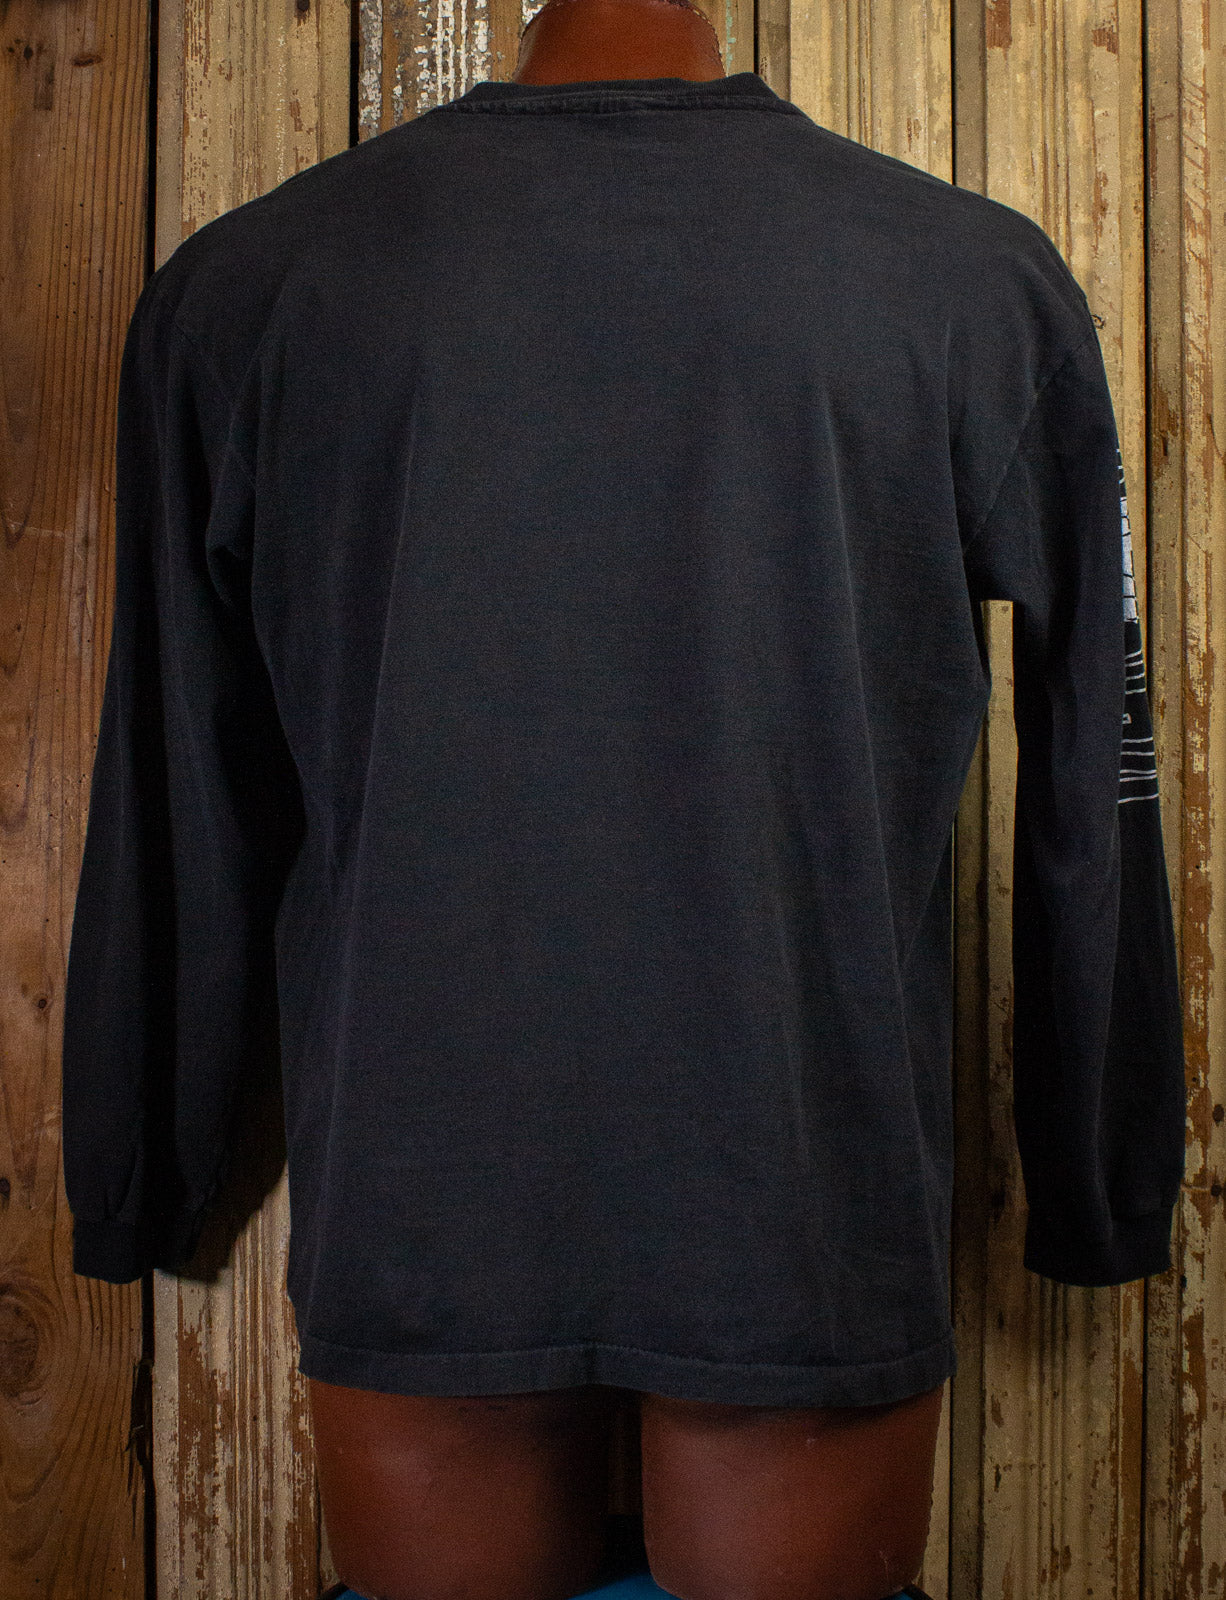 Vintage Danzig 4 Concert T Shirt Long Sleeve 1994 Black XL